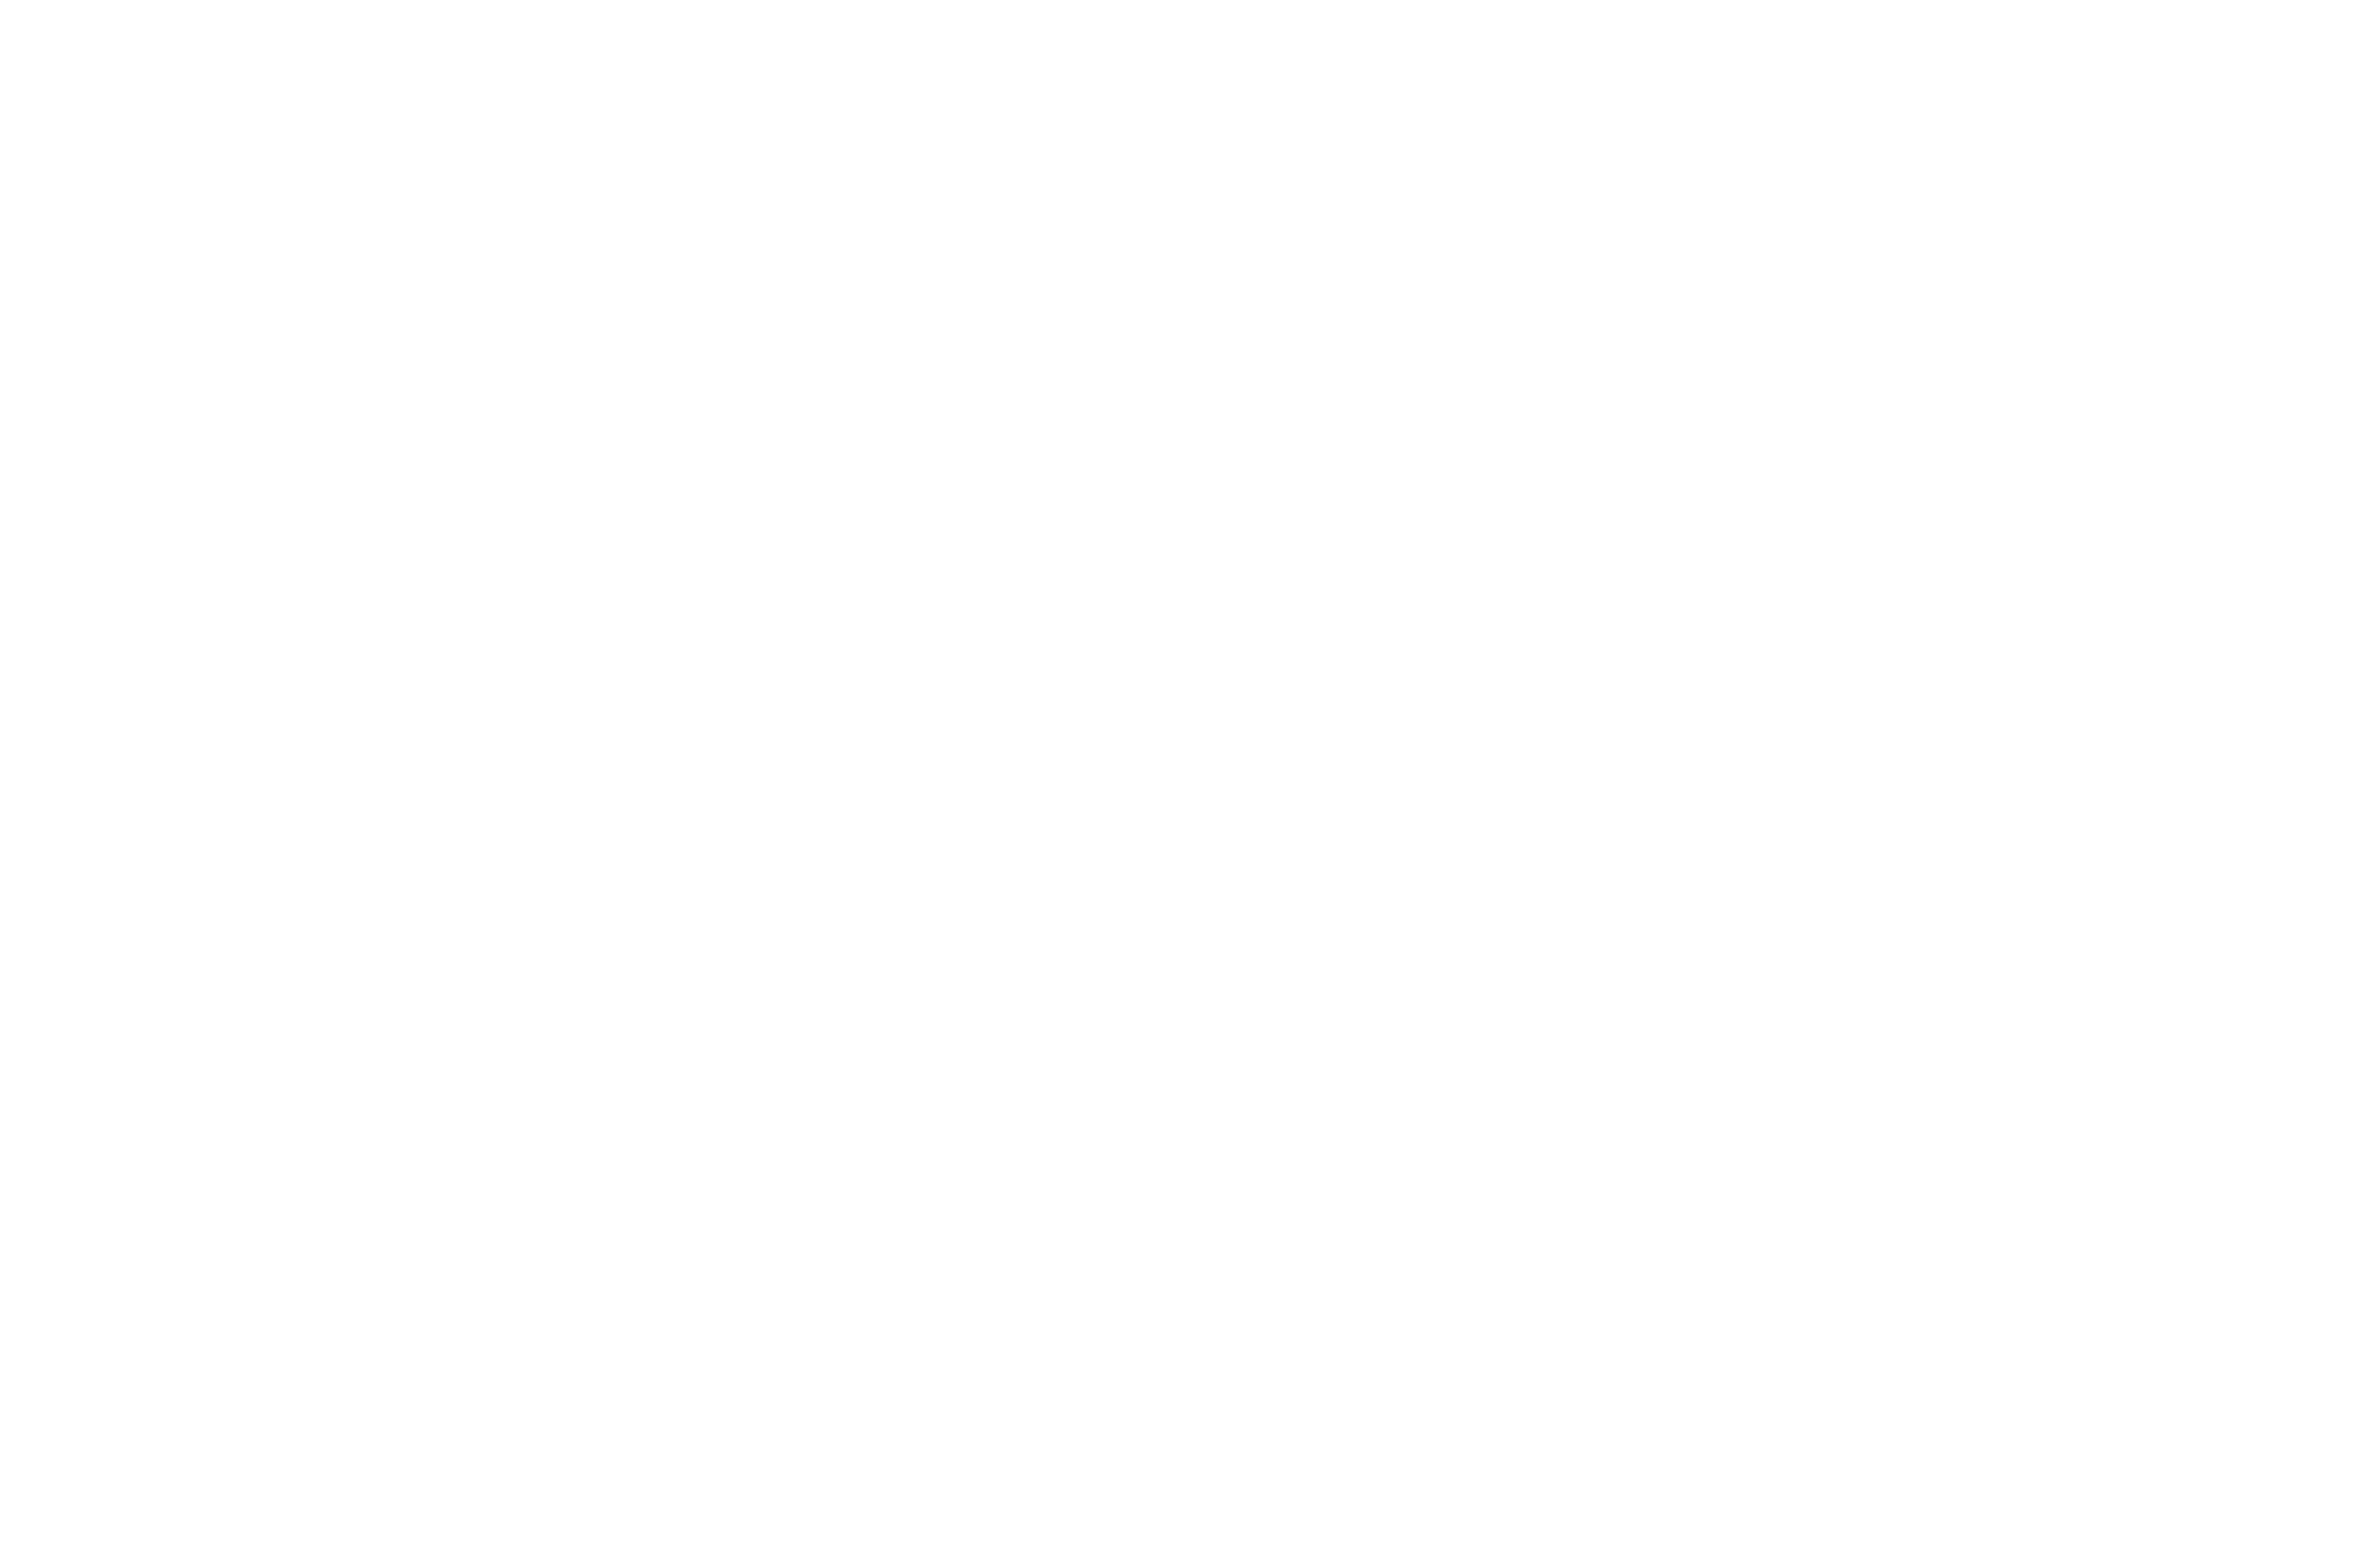 CAETANO REAL ESTATE - Agent Contact